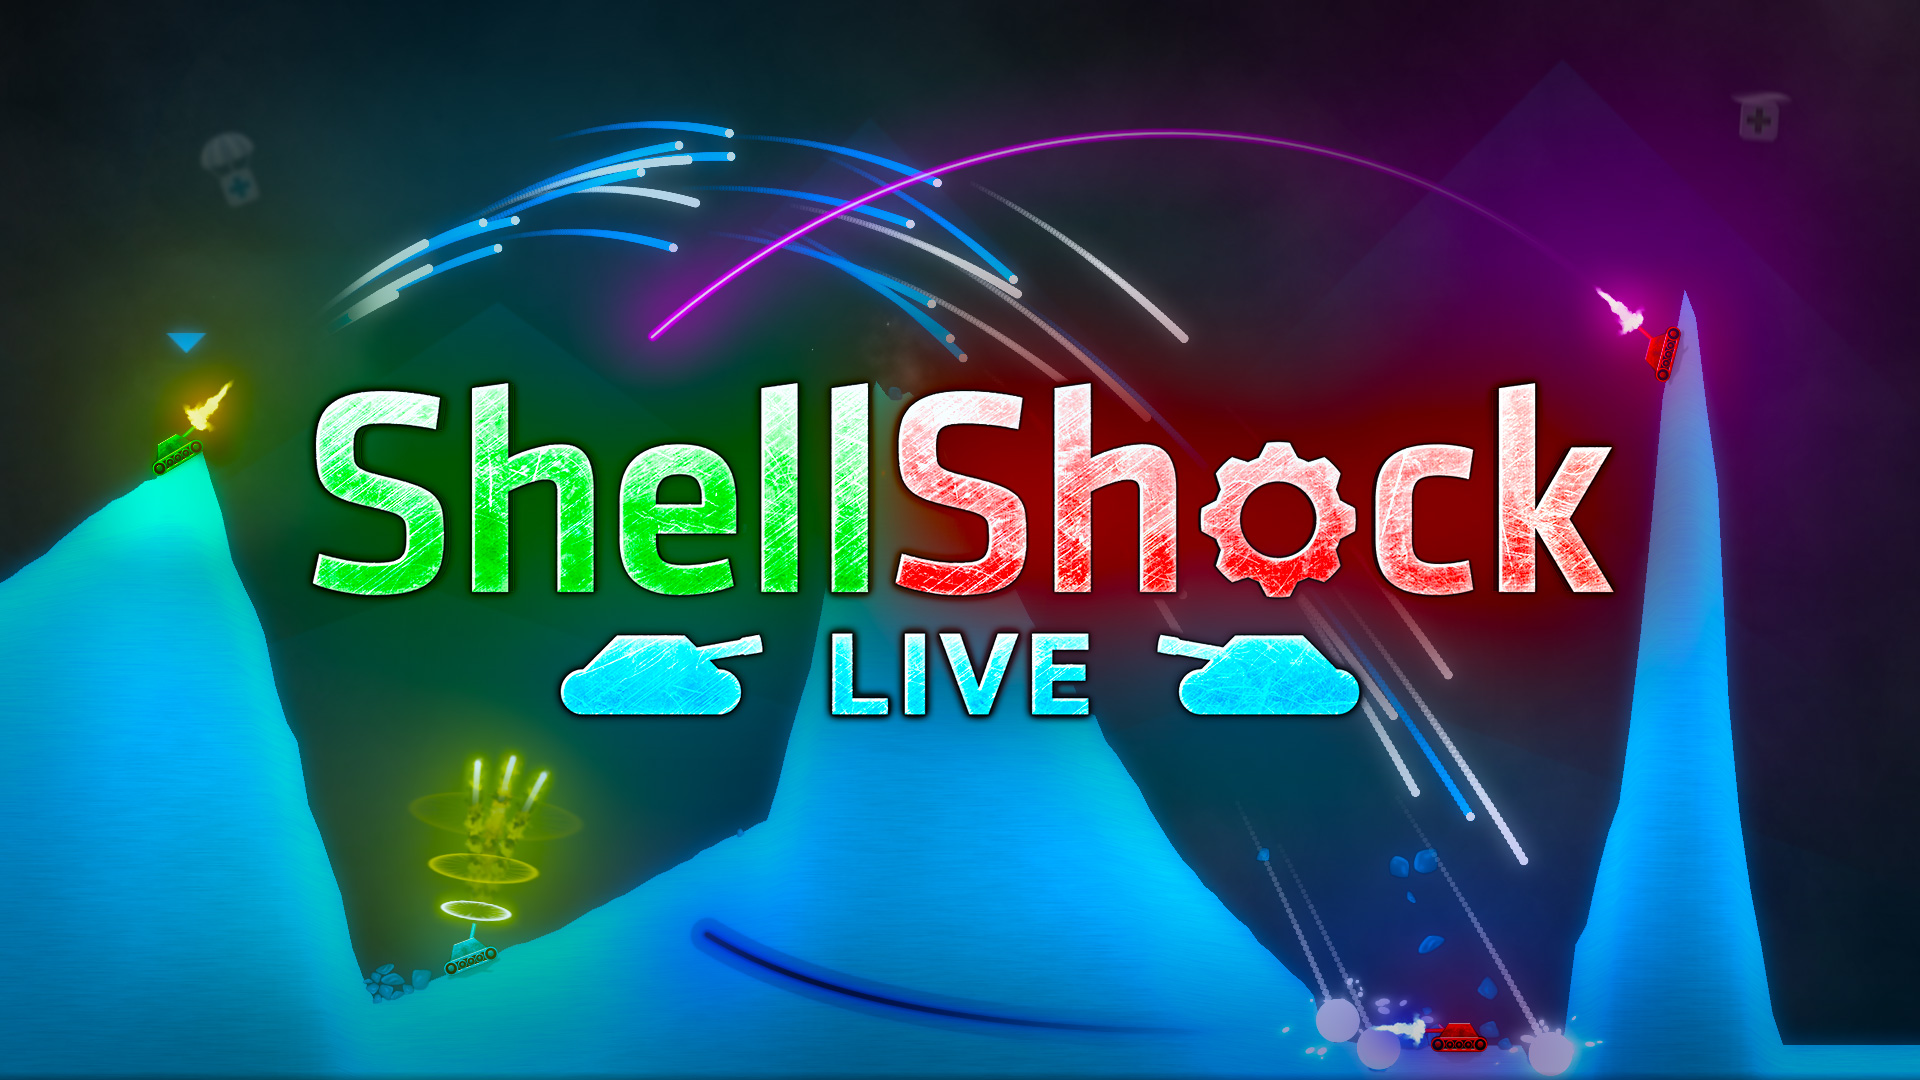 LIVE shell shockers 